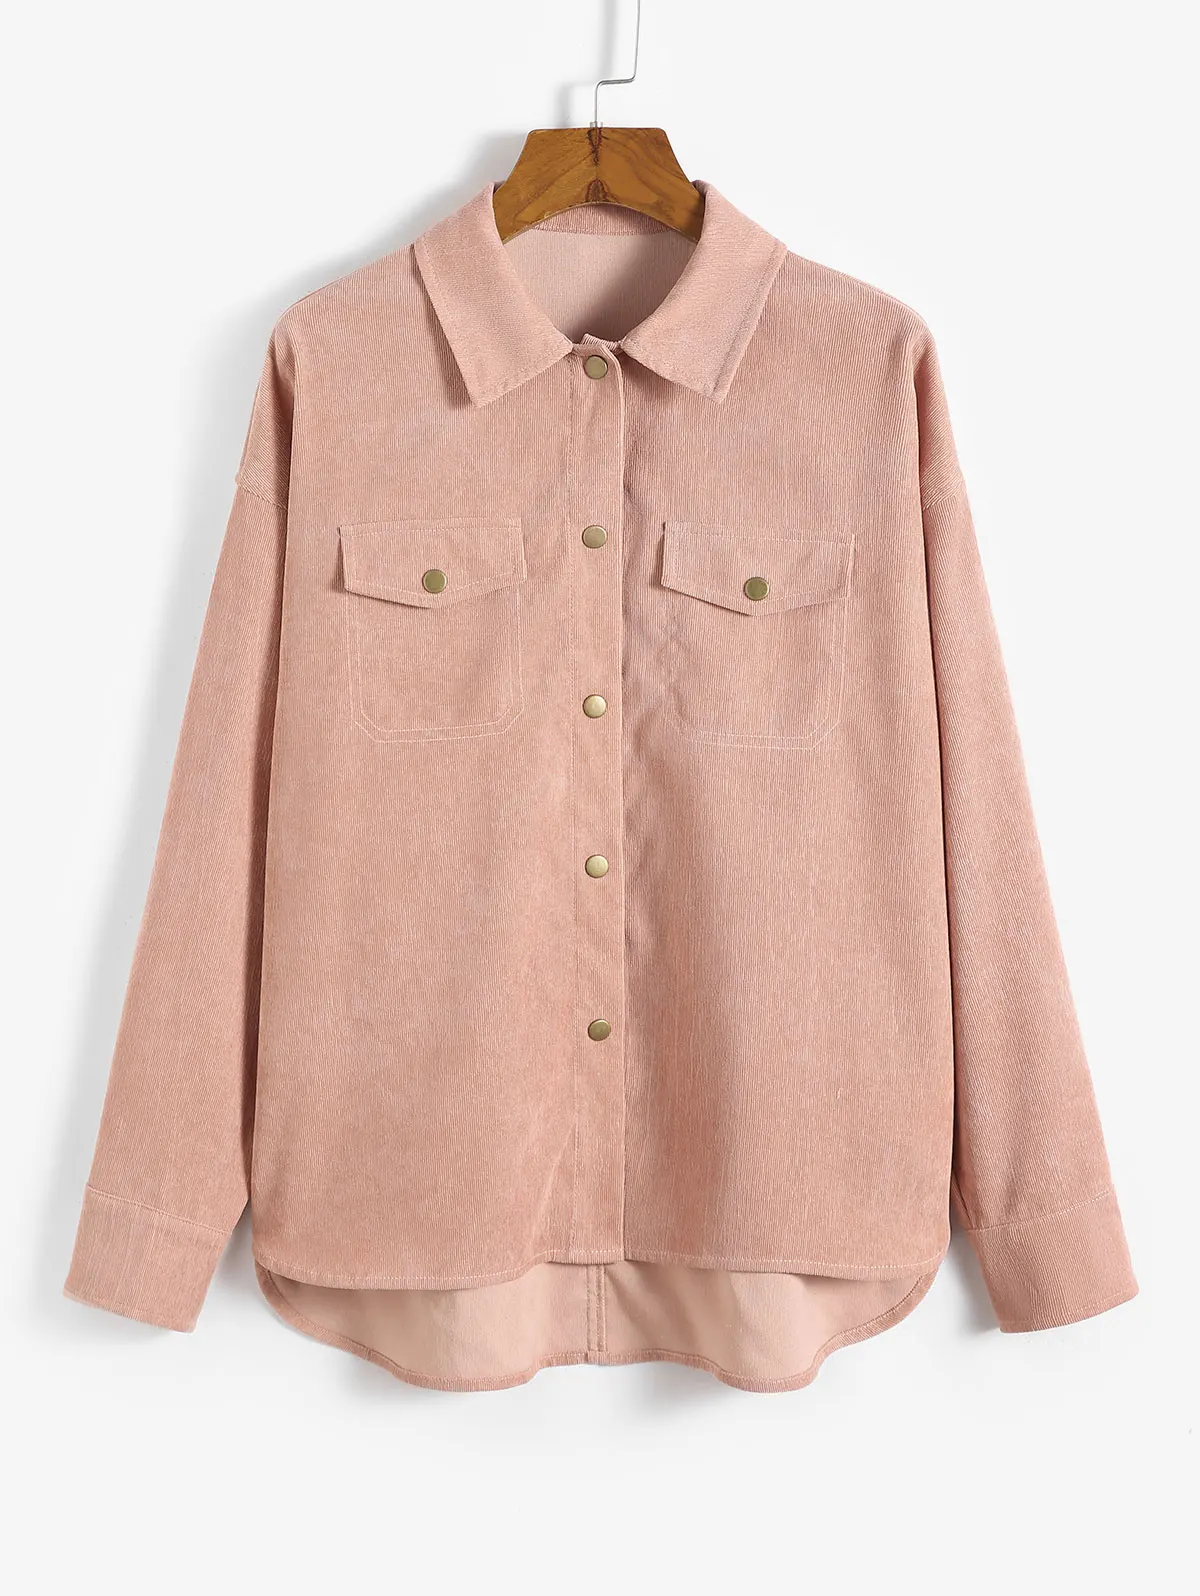 

ZAFUL High Low Flap Details Corduroy Shacket Female Long Sleeve Single Breasted Shirt Jacket Spring Fashion